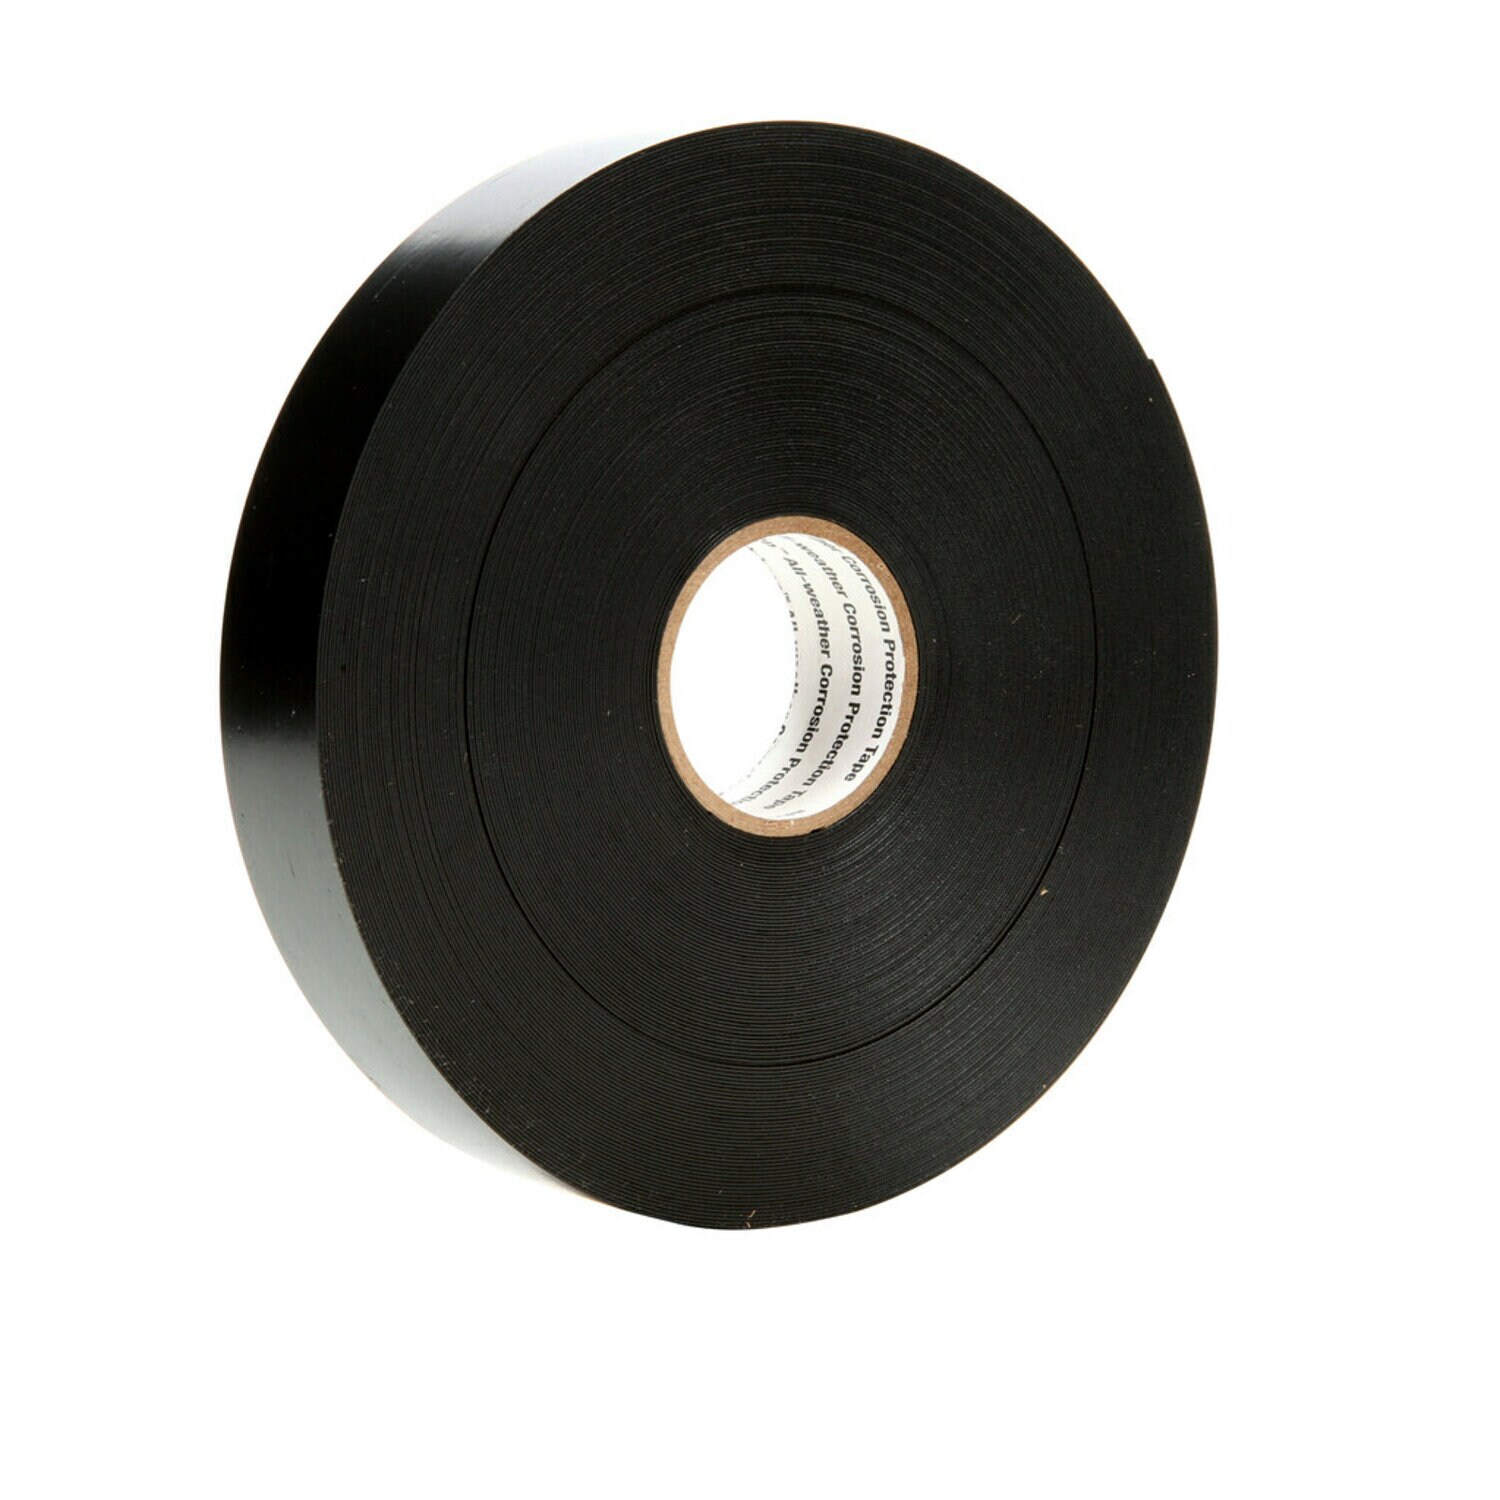 7000006134 - 3M Scotchrap Vinyl Corrosion Protection Tape 51, 1 in x 100 ft,
Unprinted, Black, 24 rolls/Case